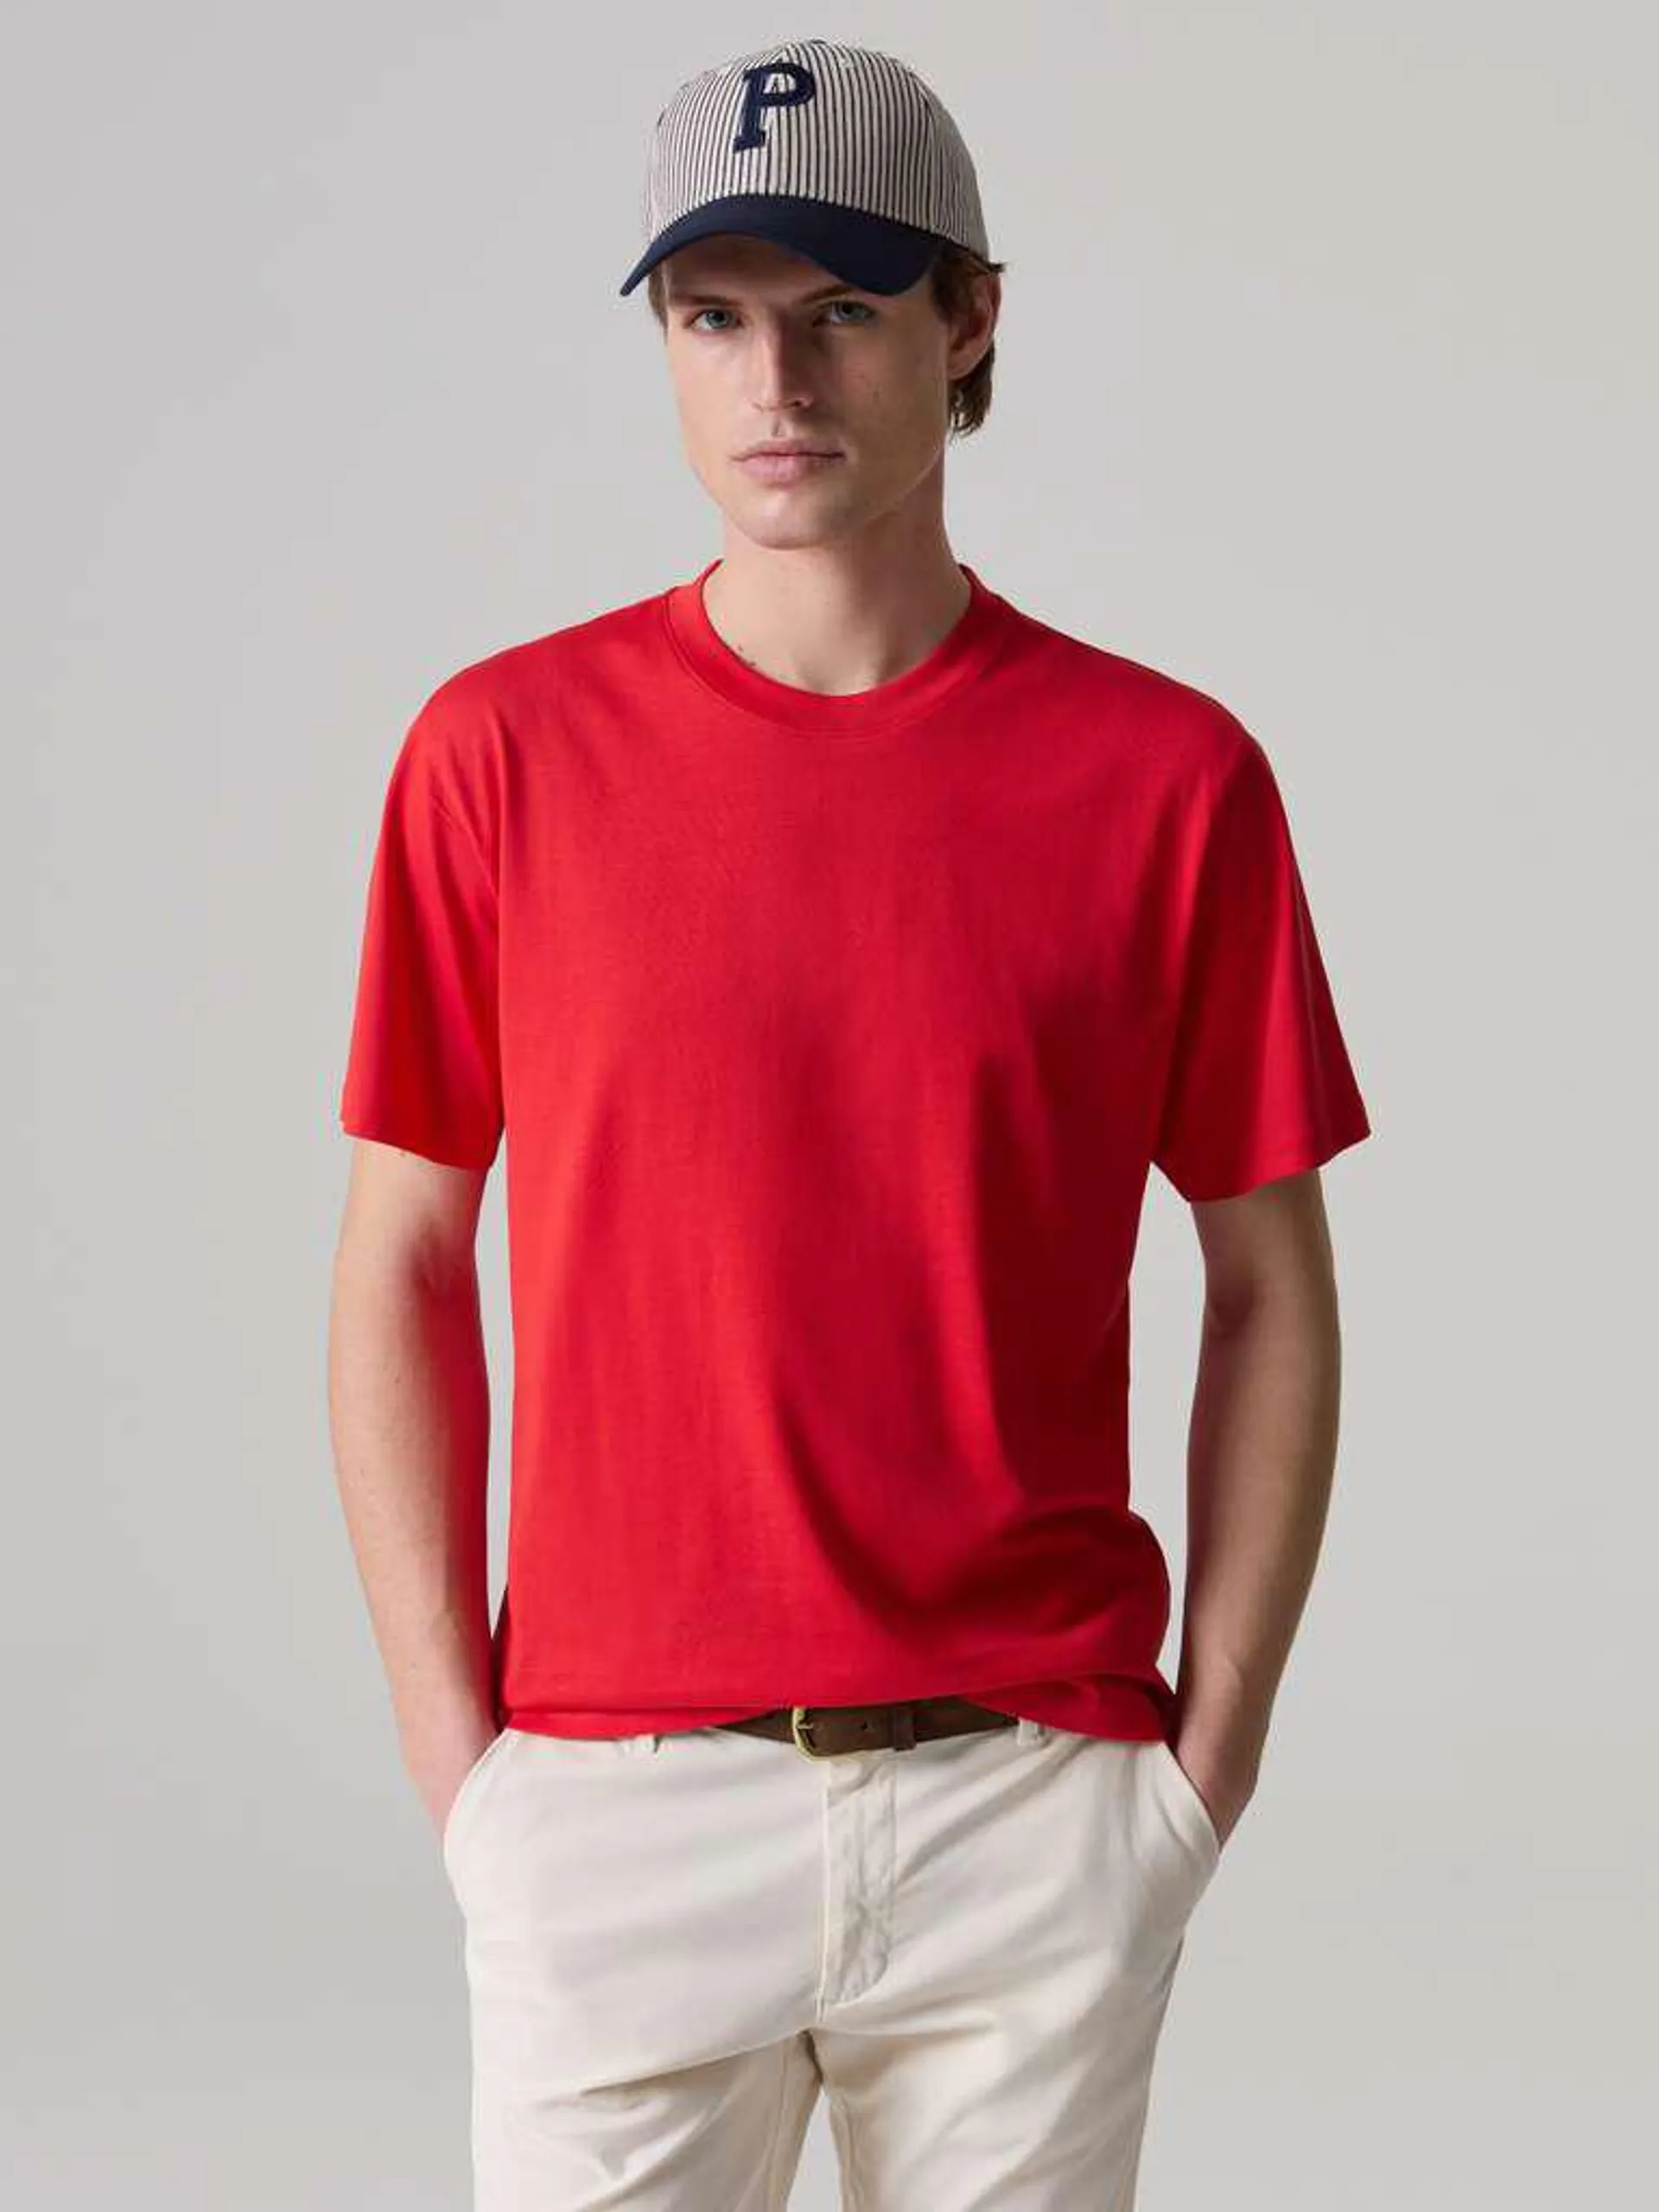 Geranium Red Supima cotton T-shirt with round neck